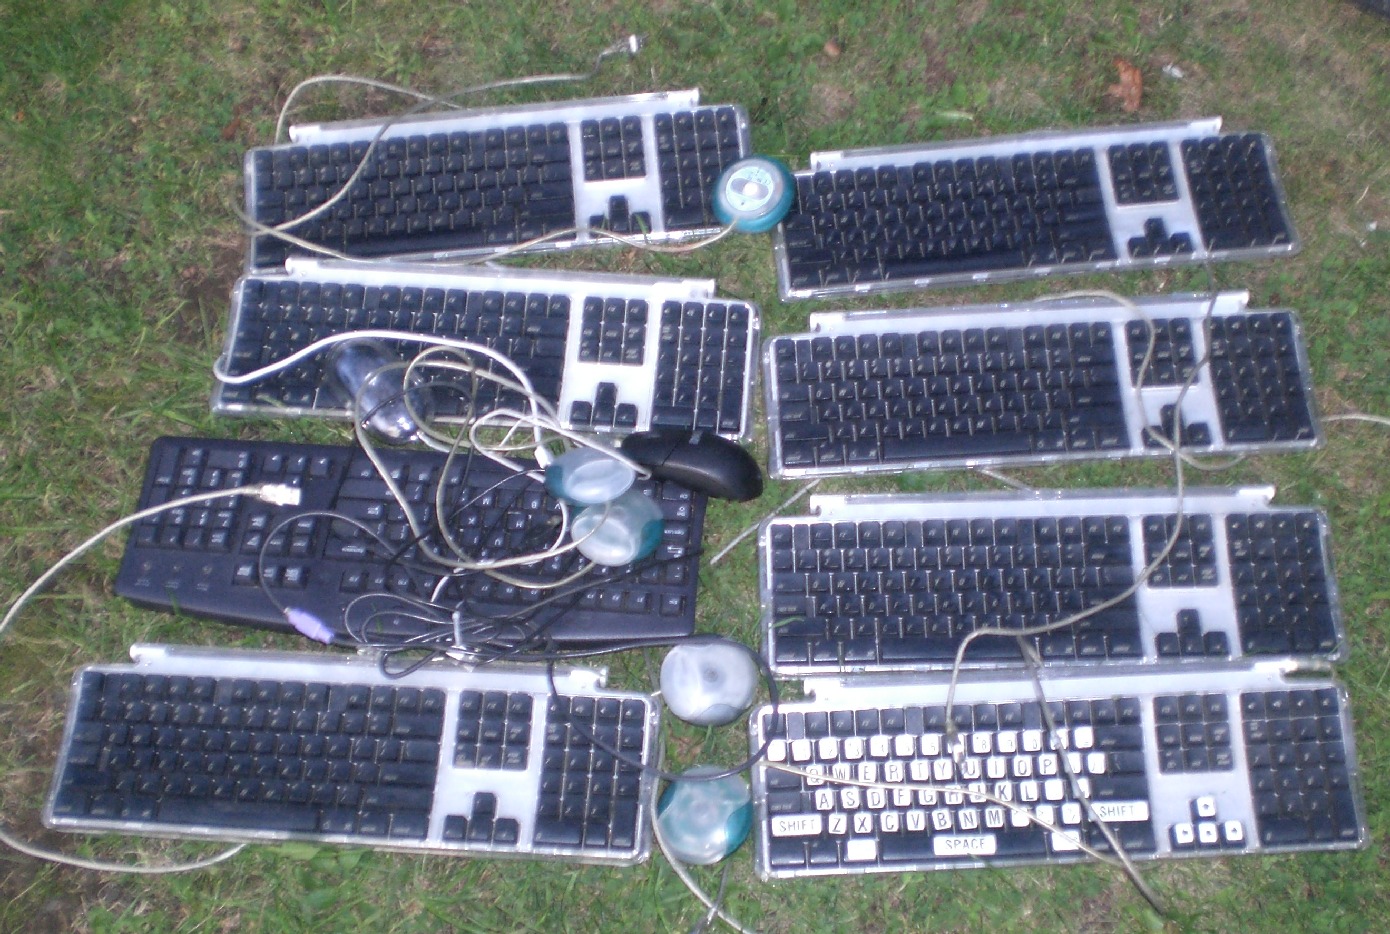 mac keyboards